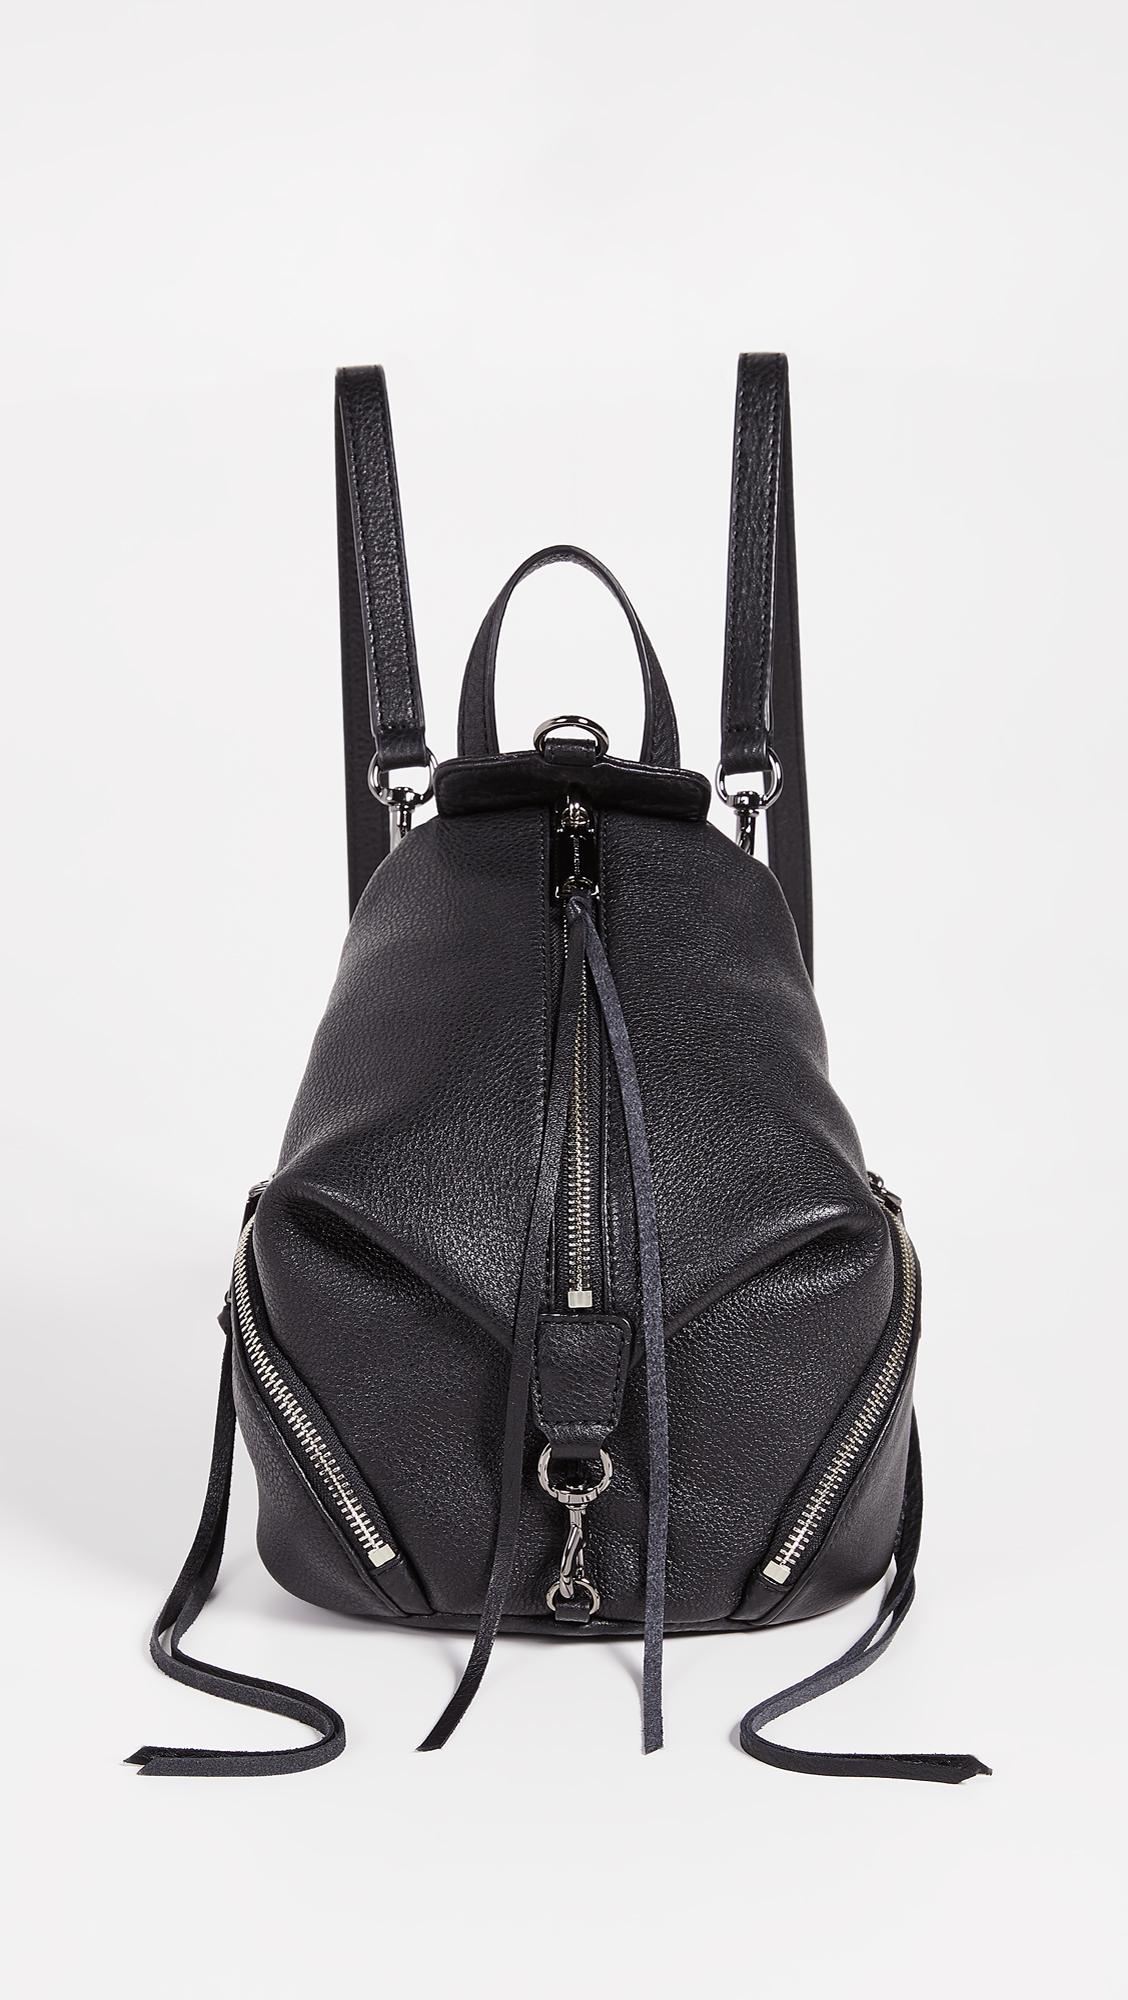 Lyst - Rebecca Minkoff Convertible Mini Julian Backpack in Black